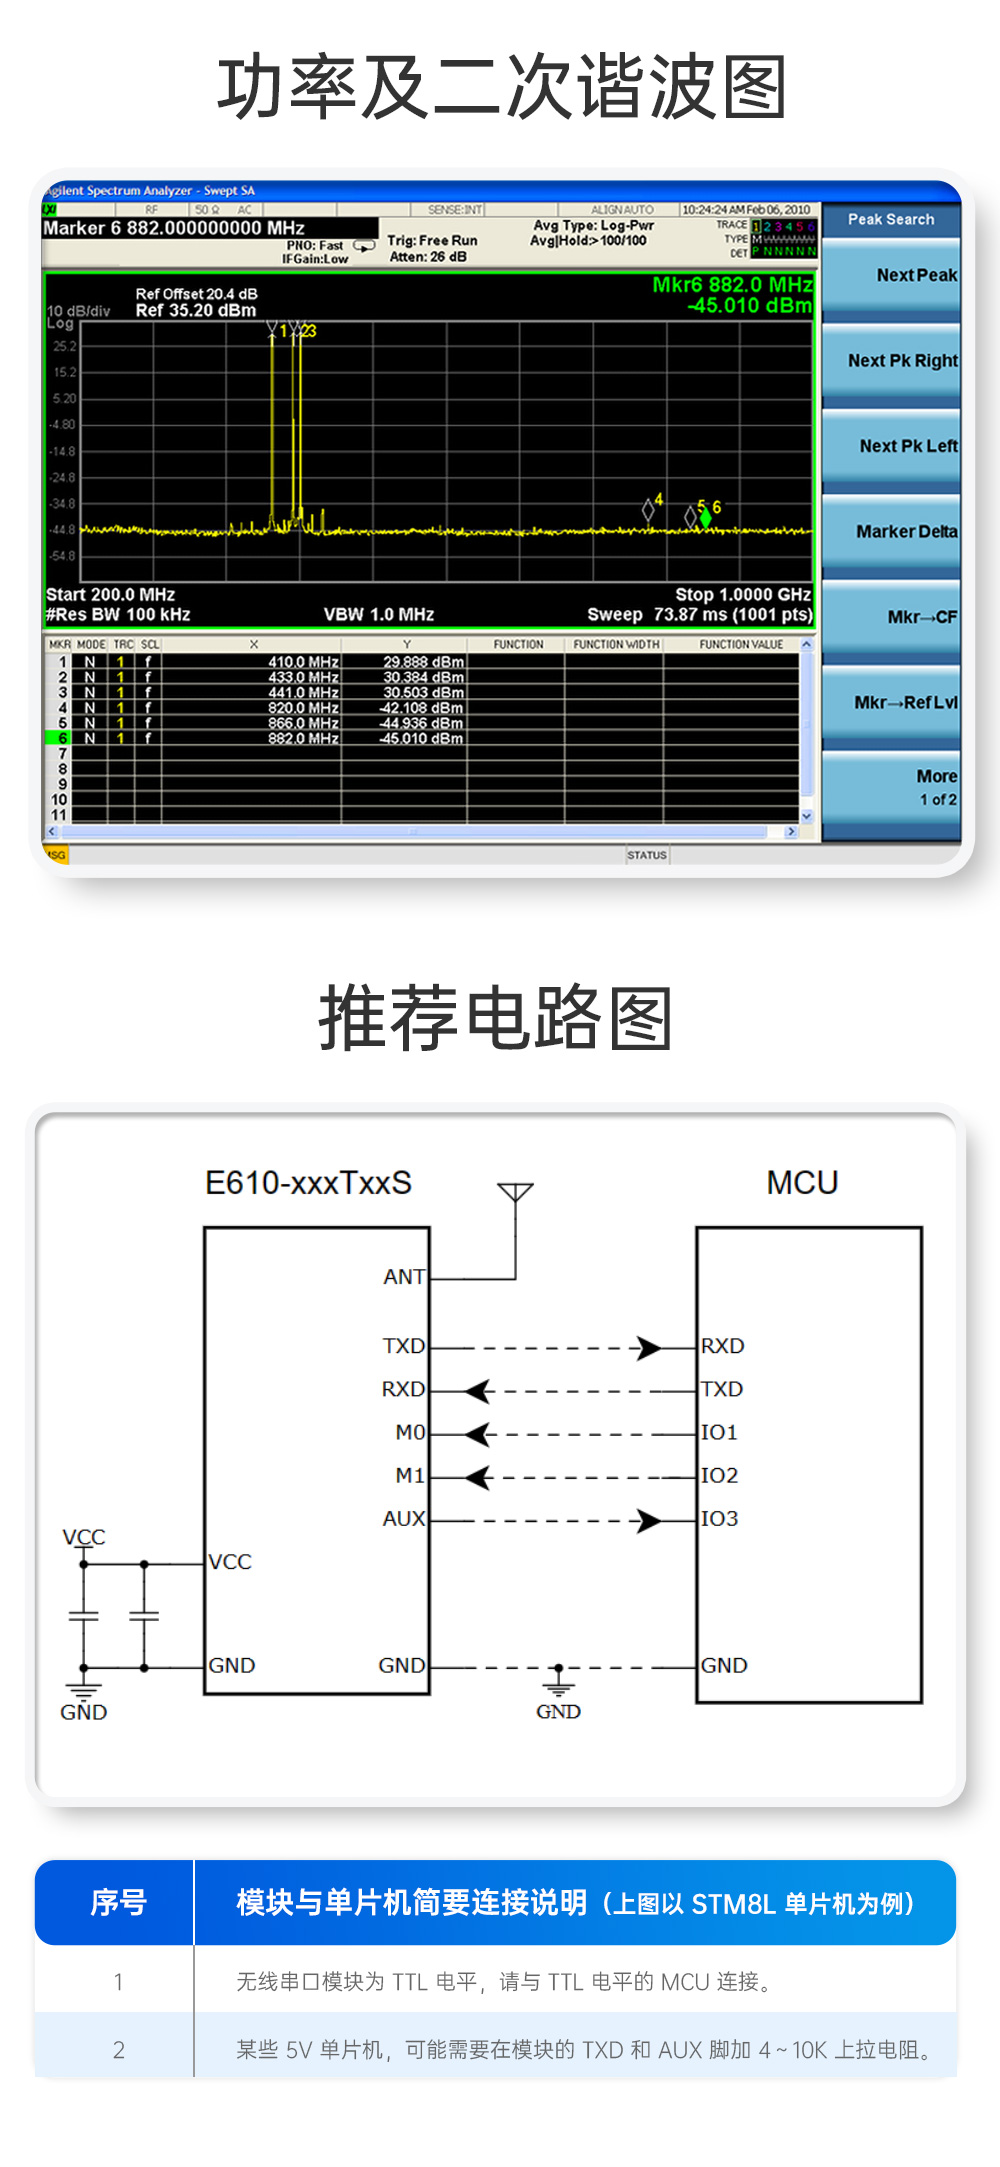 E610-900T20S 无线高速连续传输模块 (16)